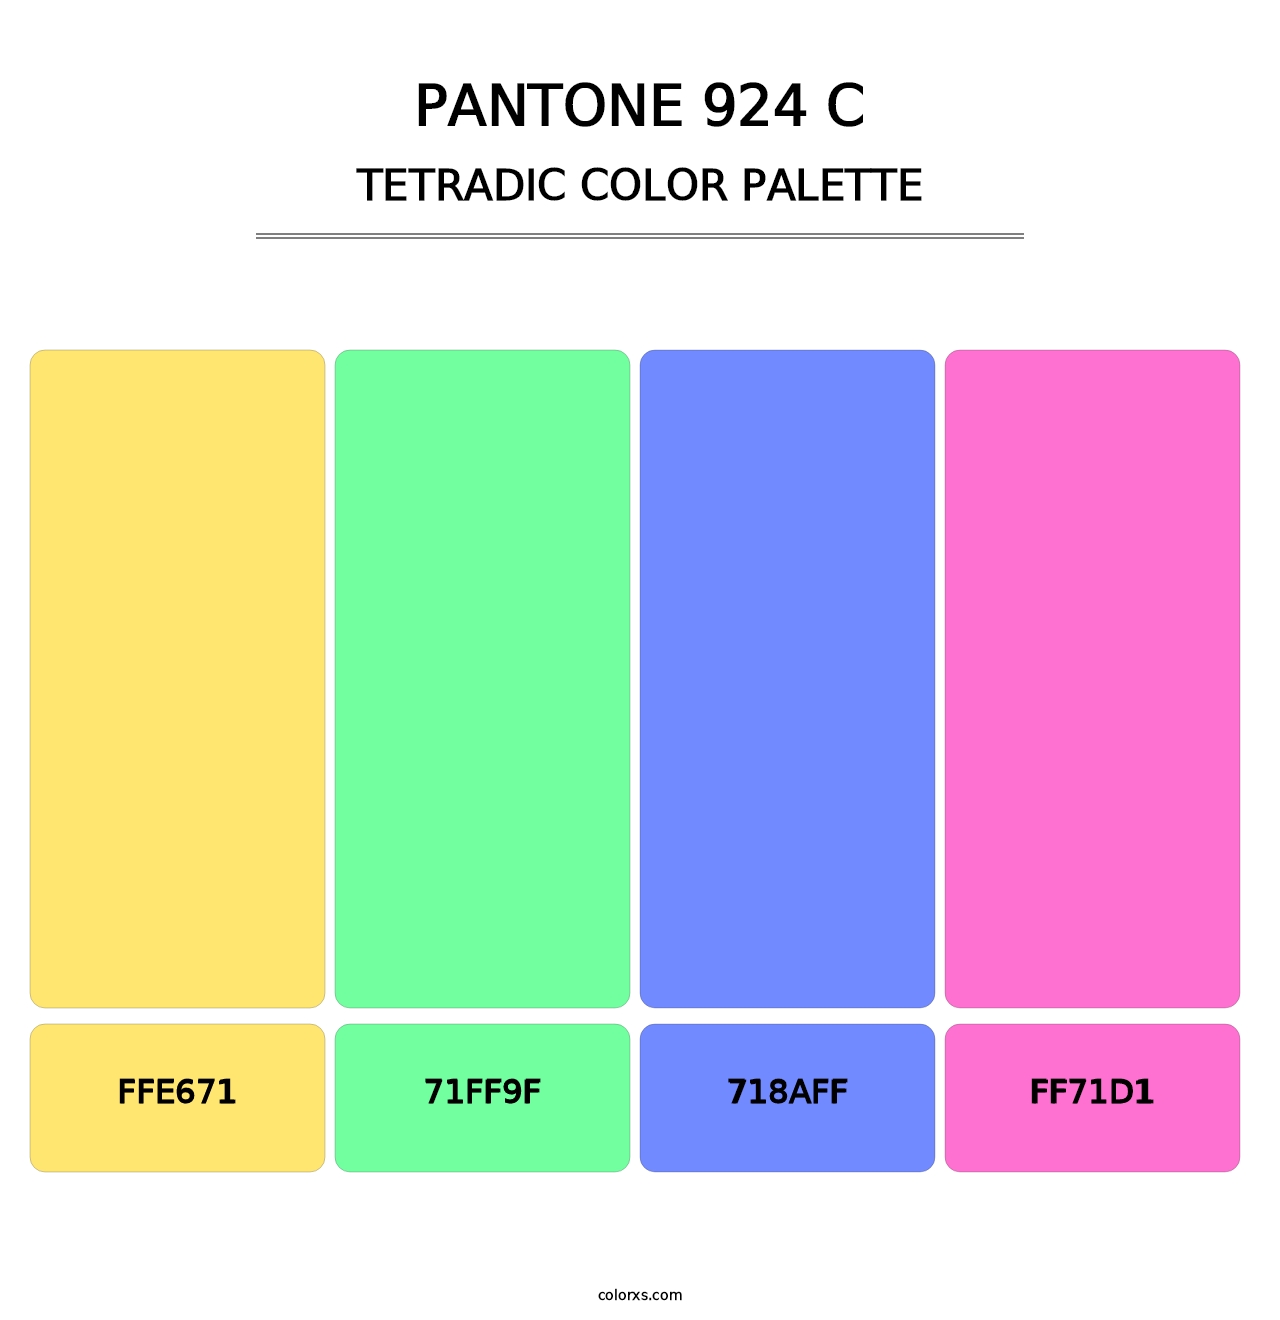 PANTONE 924 C - Tetradic Color Palette